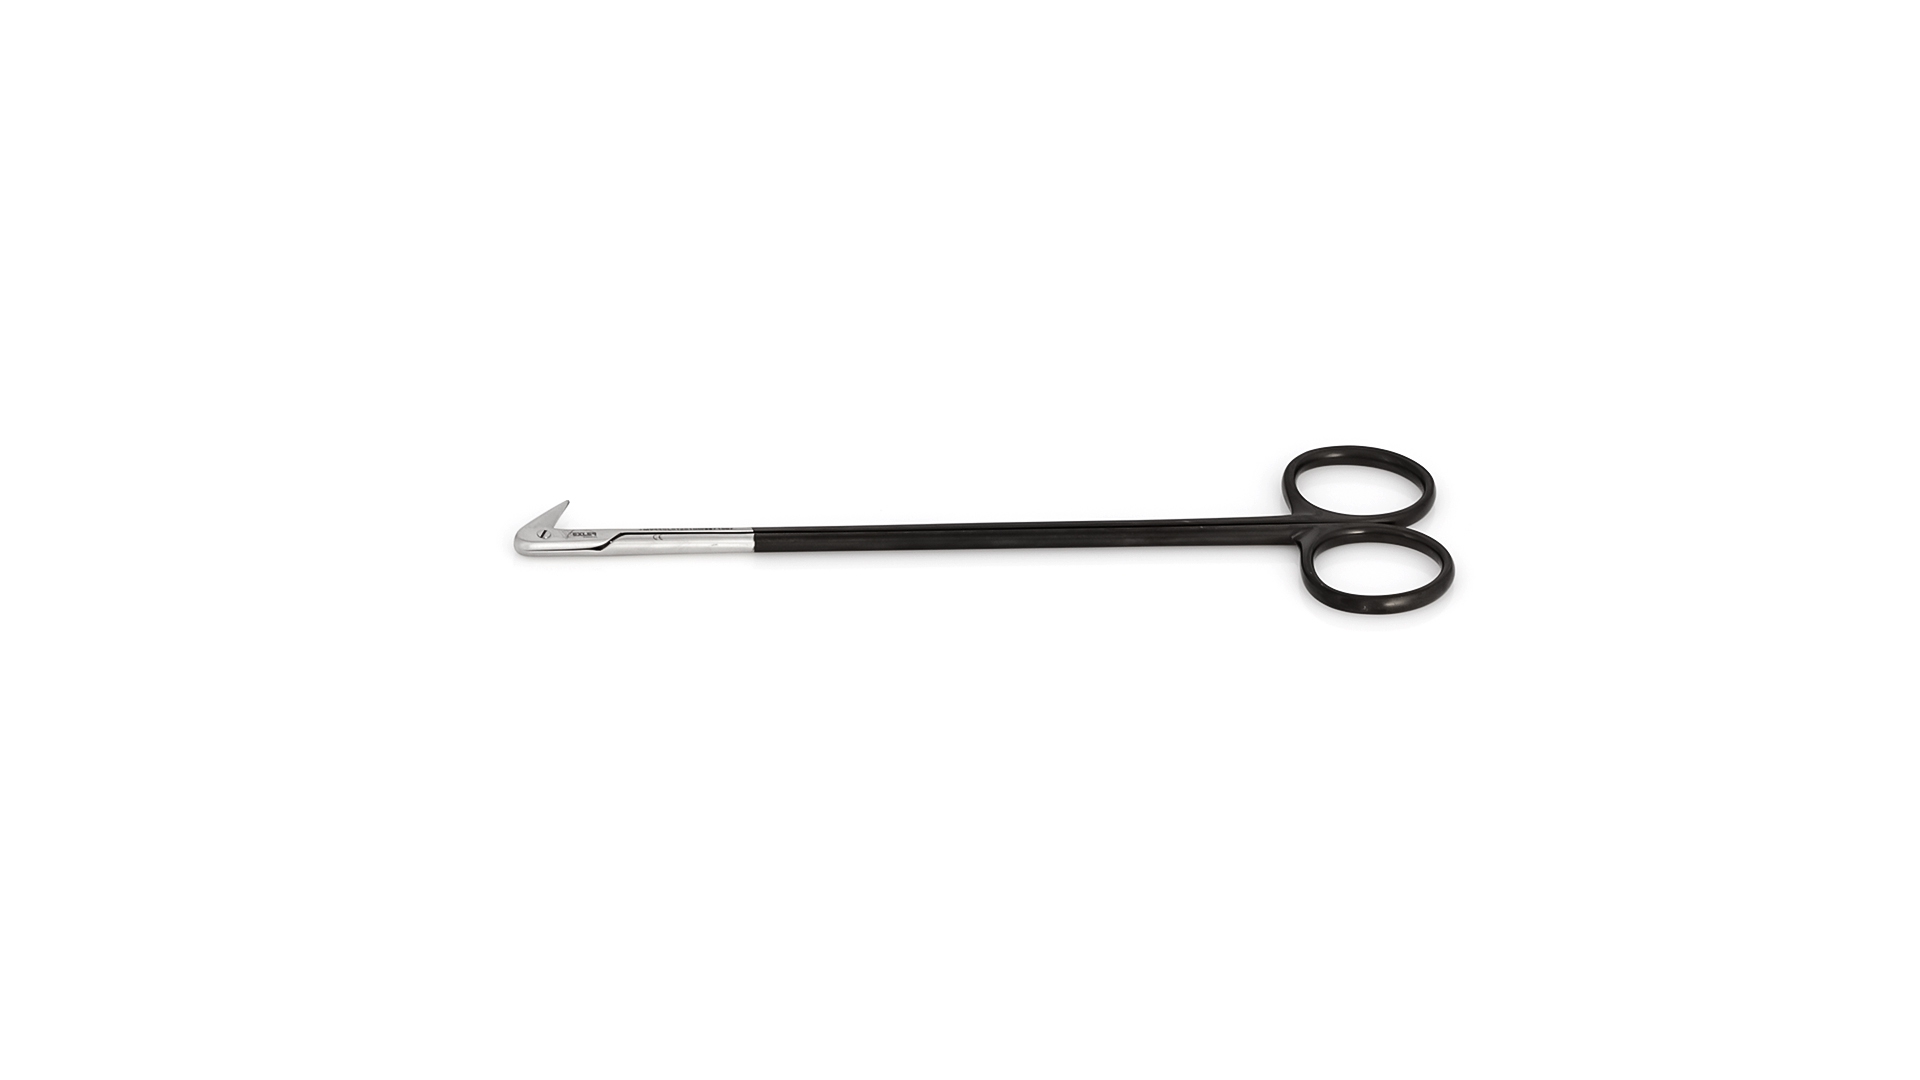 Diethrich-Potts Scissors - 125° Angled Razor edge Blades